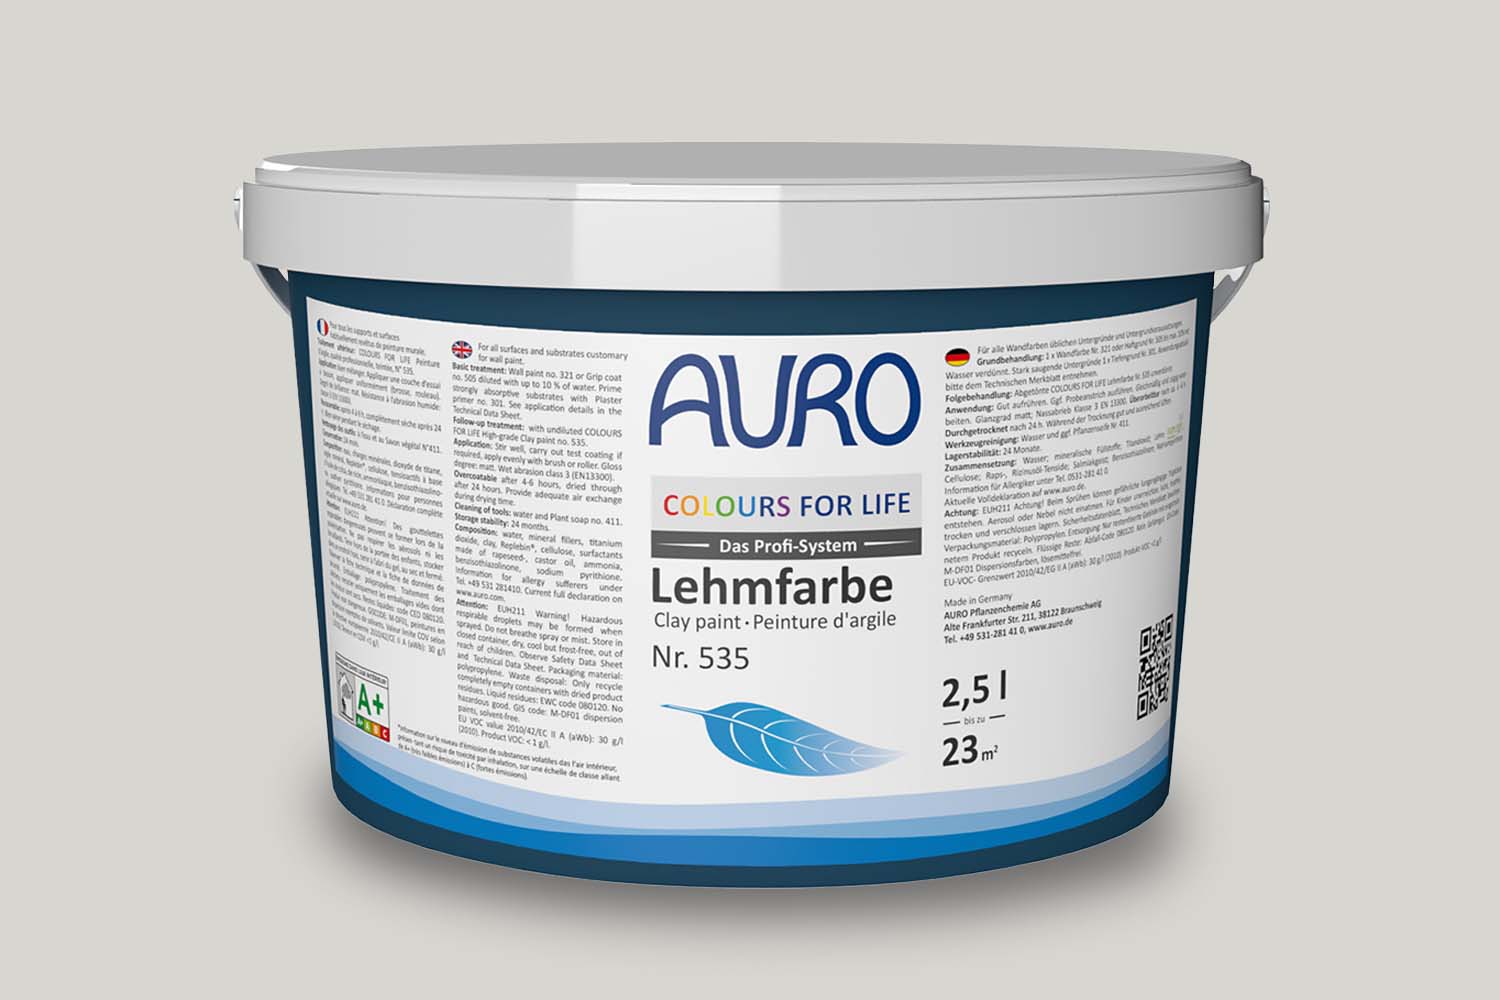 Auro Profi-Lehmfarbe Nr. 535 pale grey Colours For Life